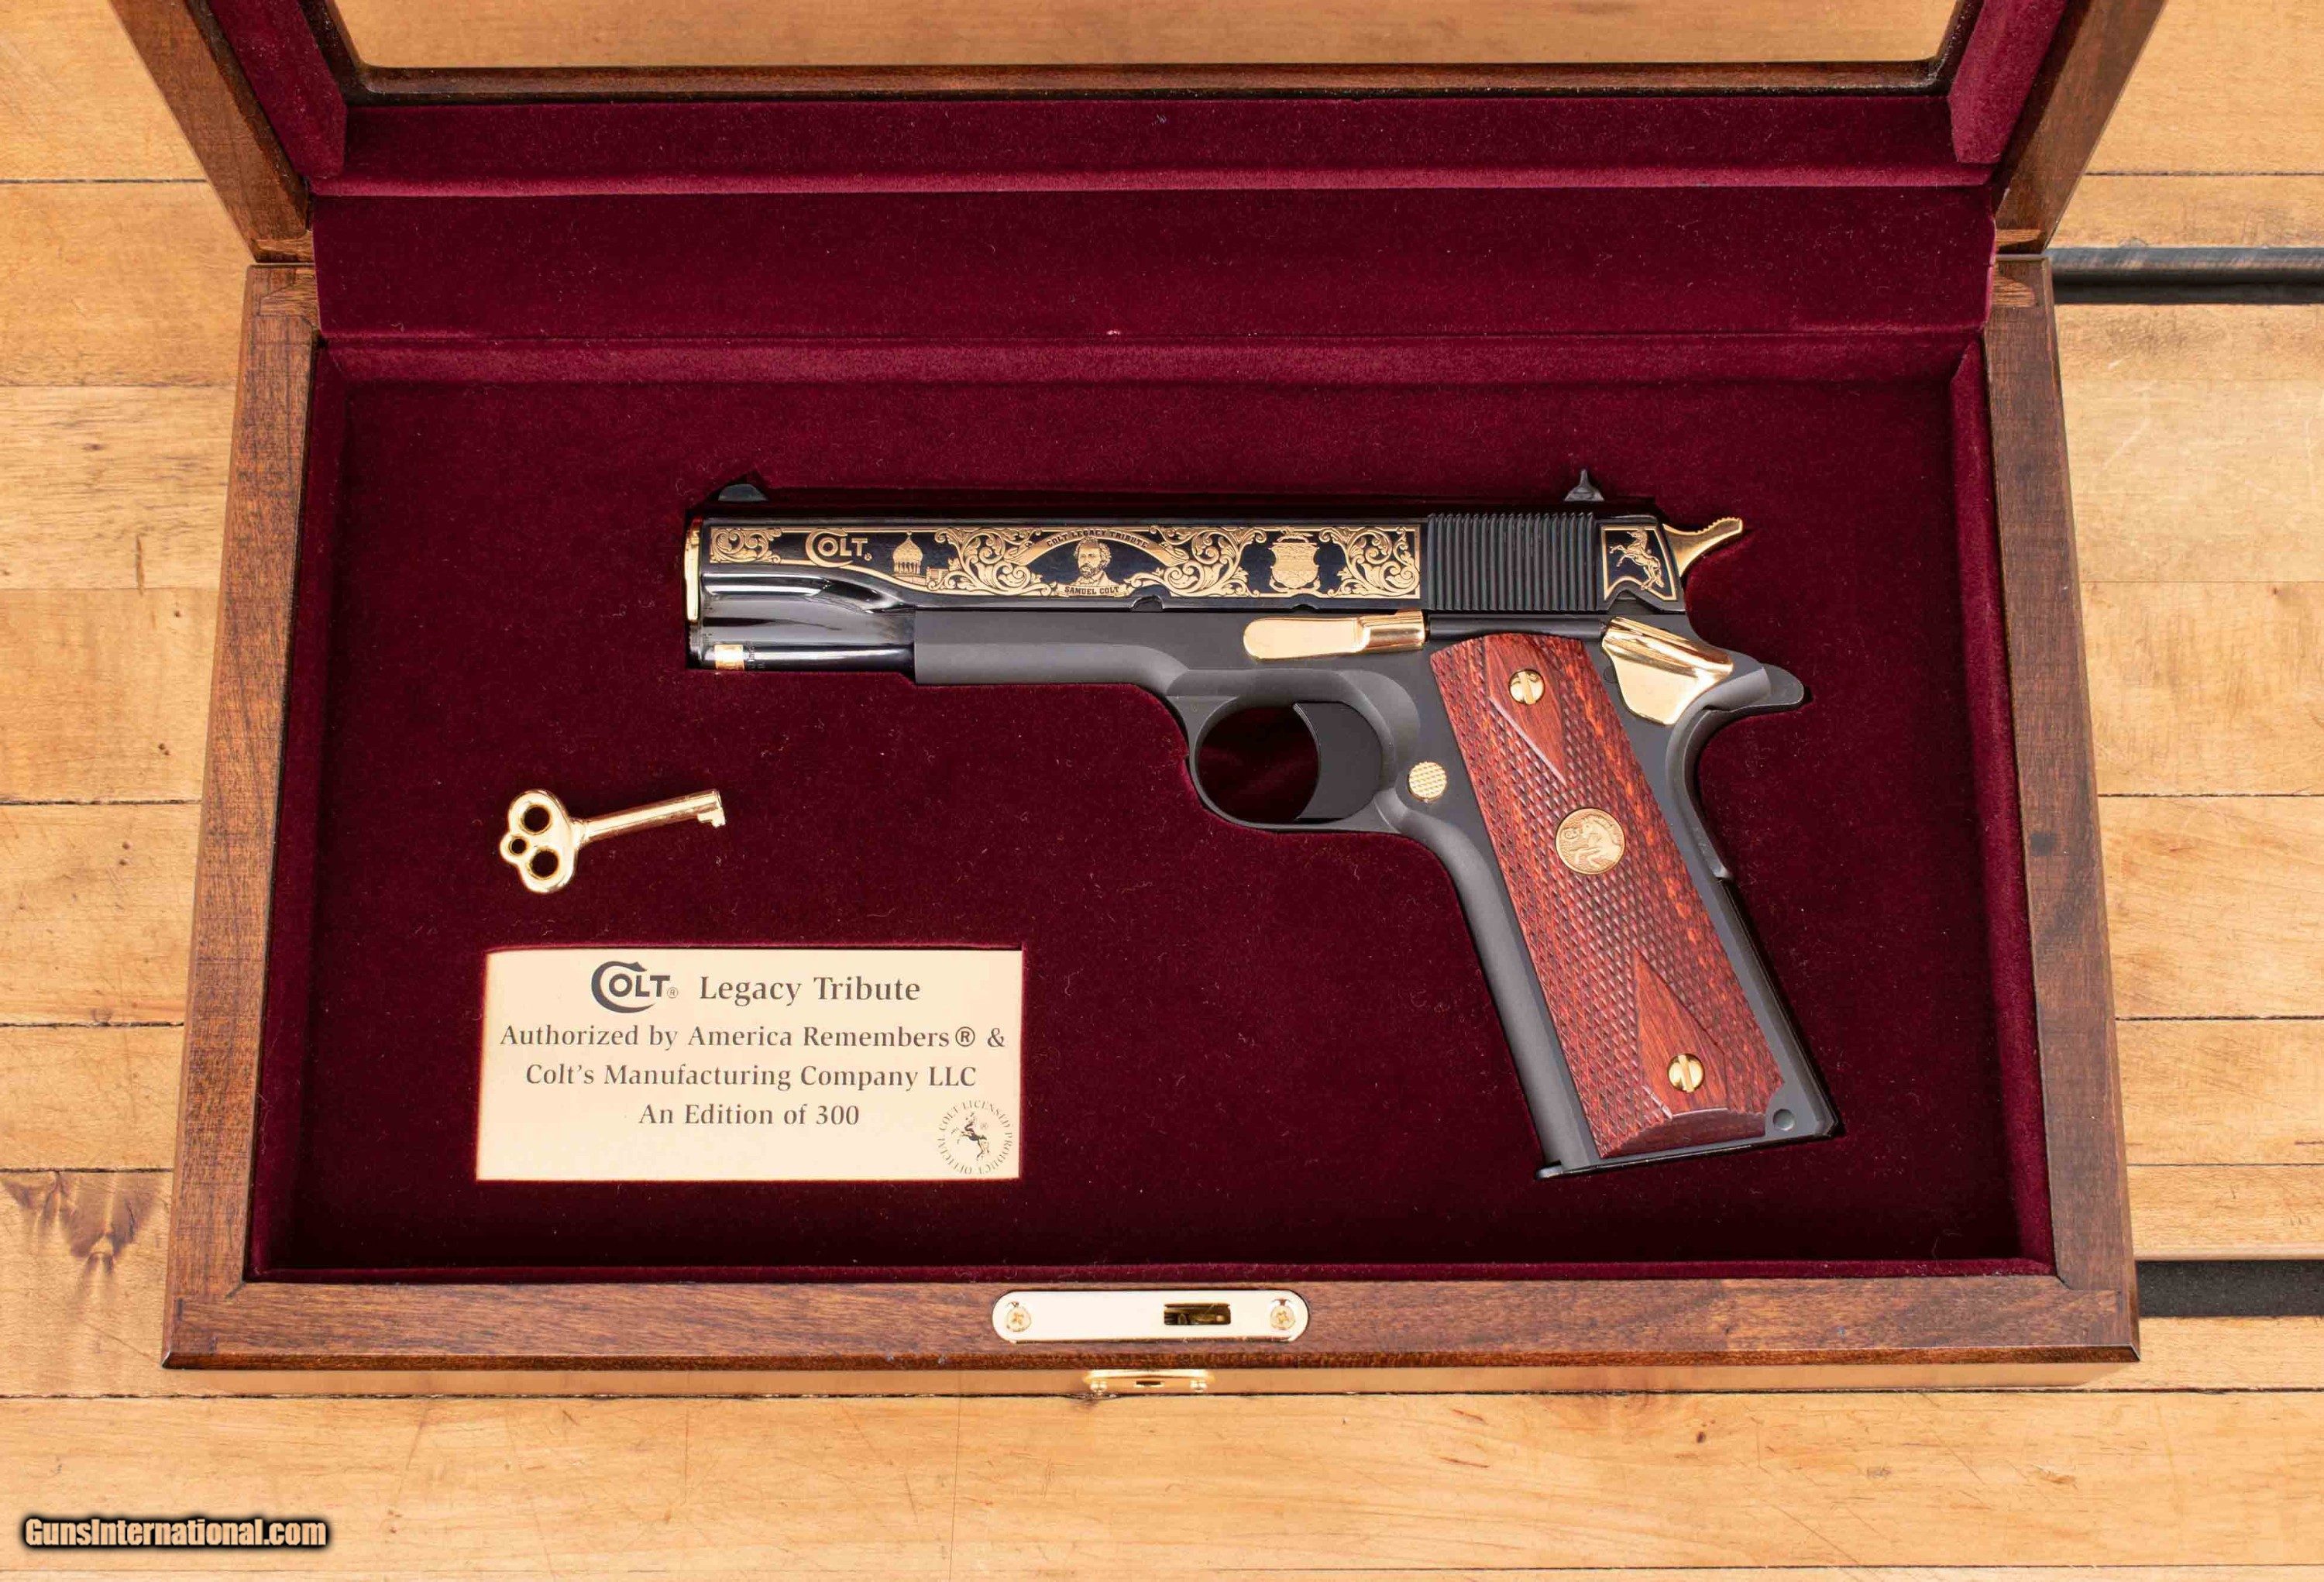 Colt Legacy Tribute 1911 .45ACP - 1 of 300, MINT, CASED, vintage firearms  inc